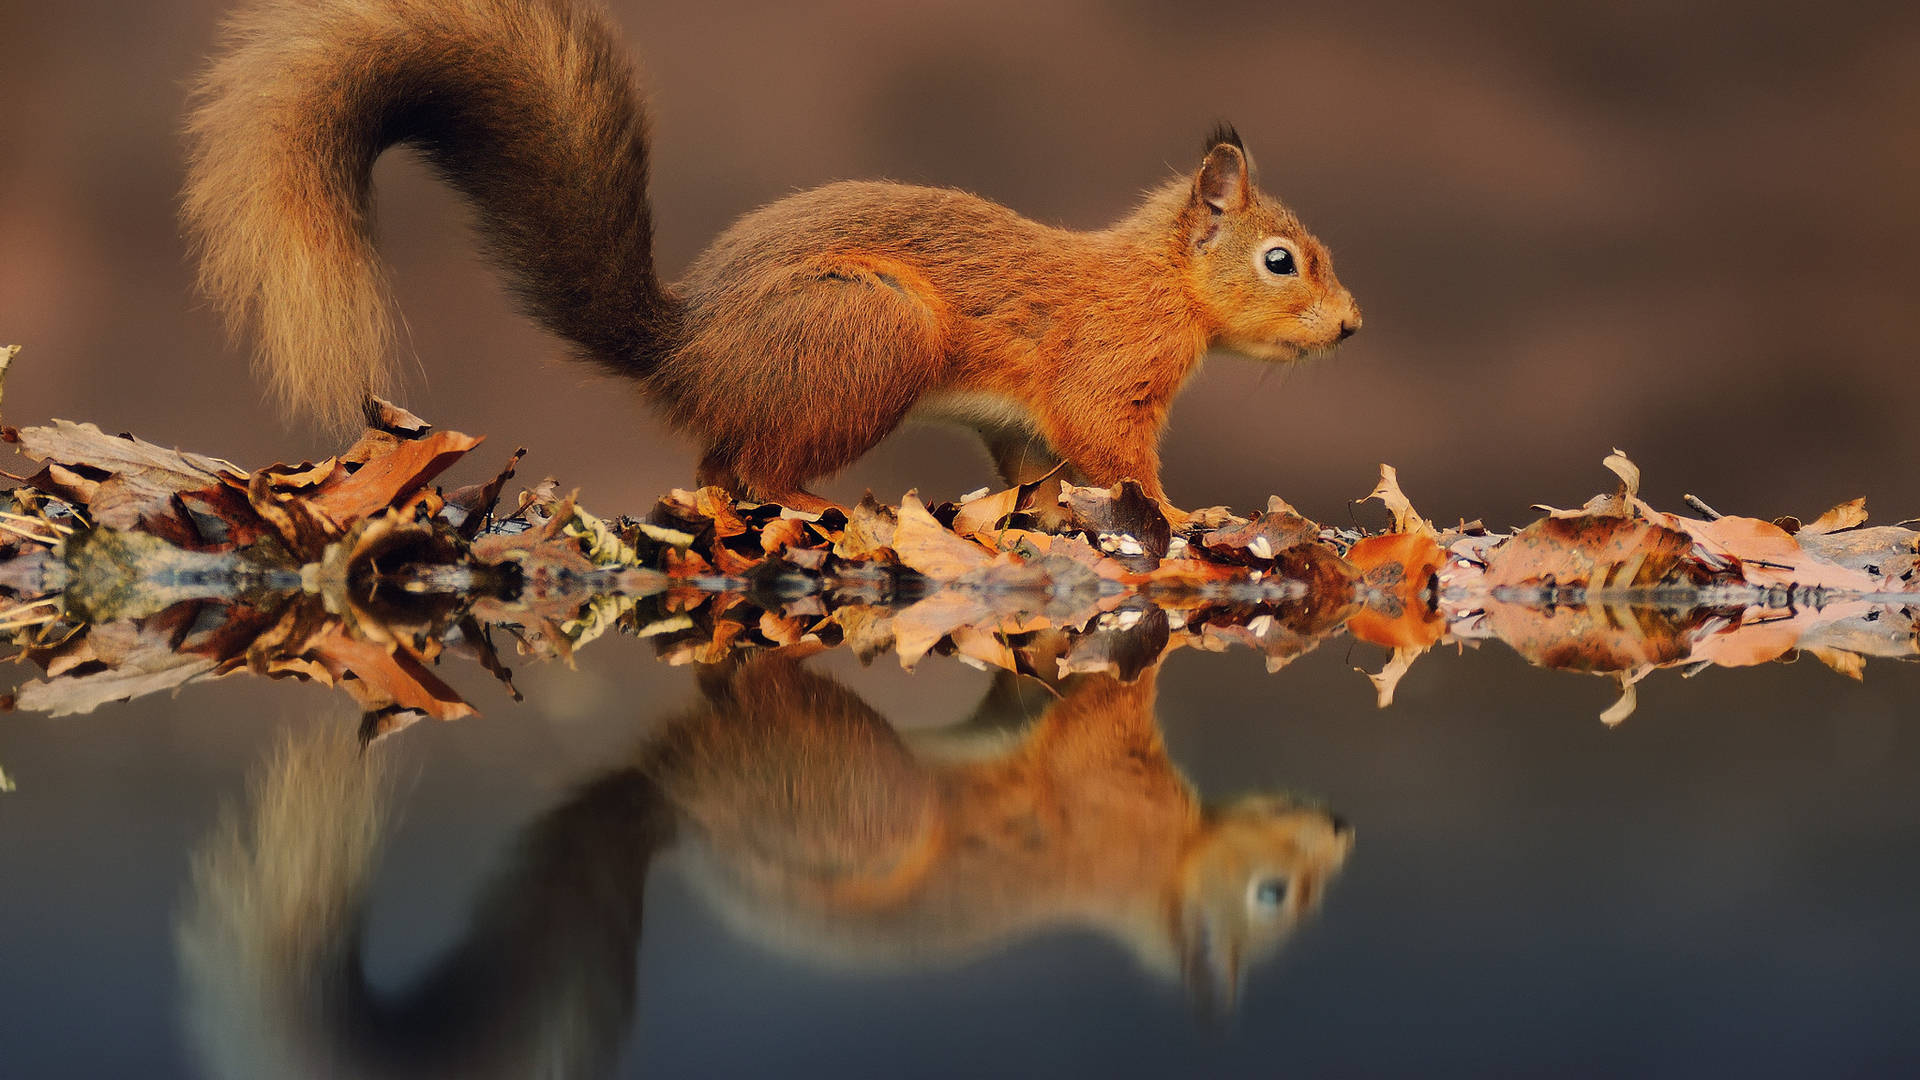 Squirrel Wallpaper Images